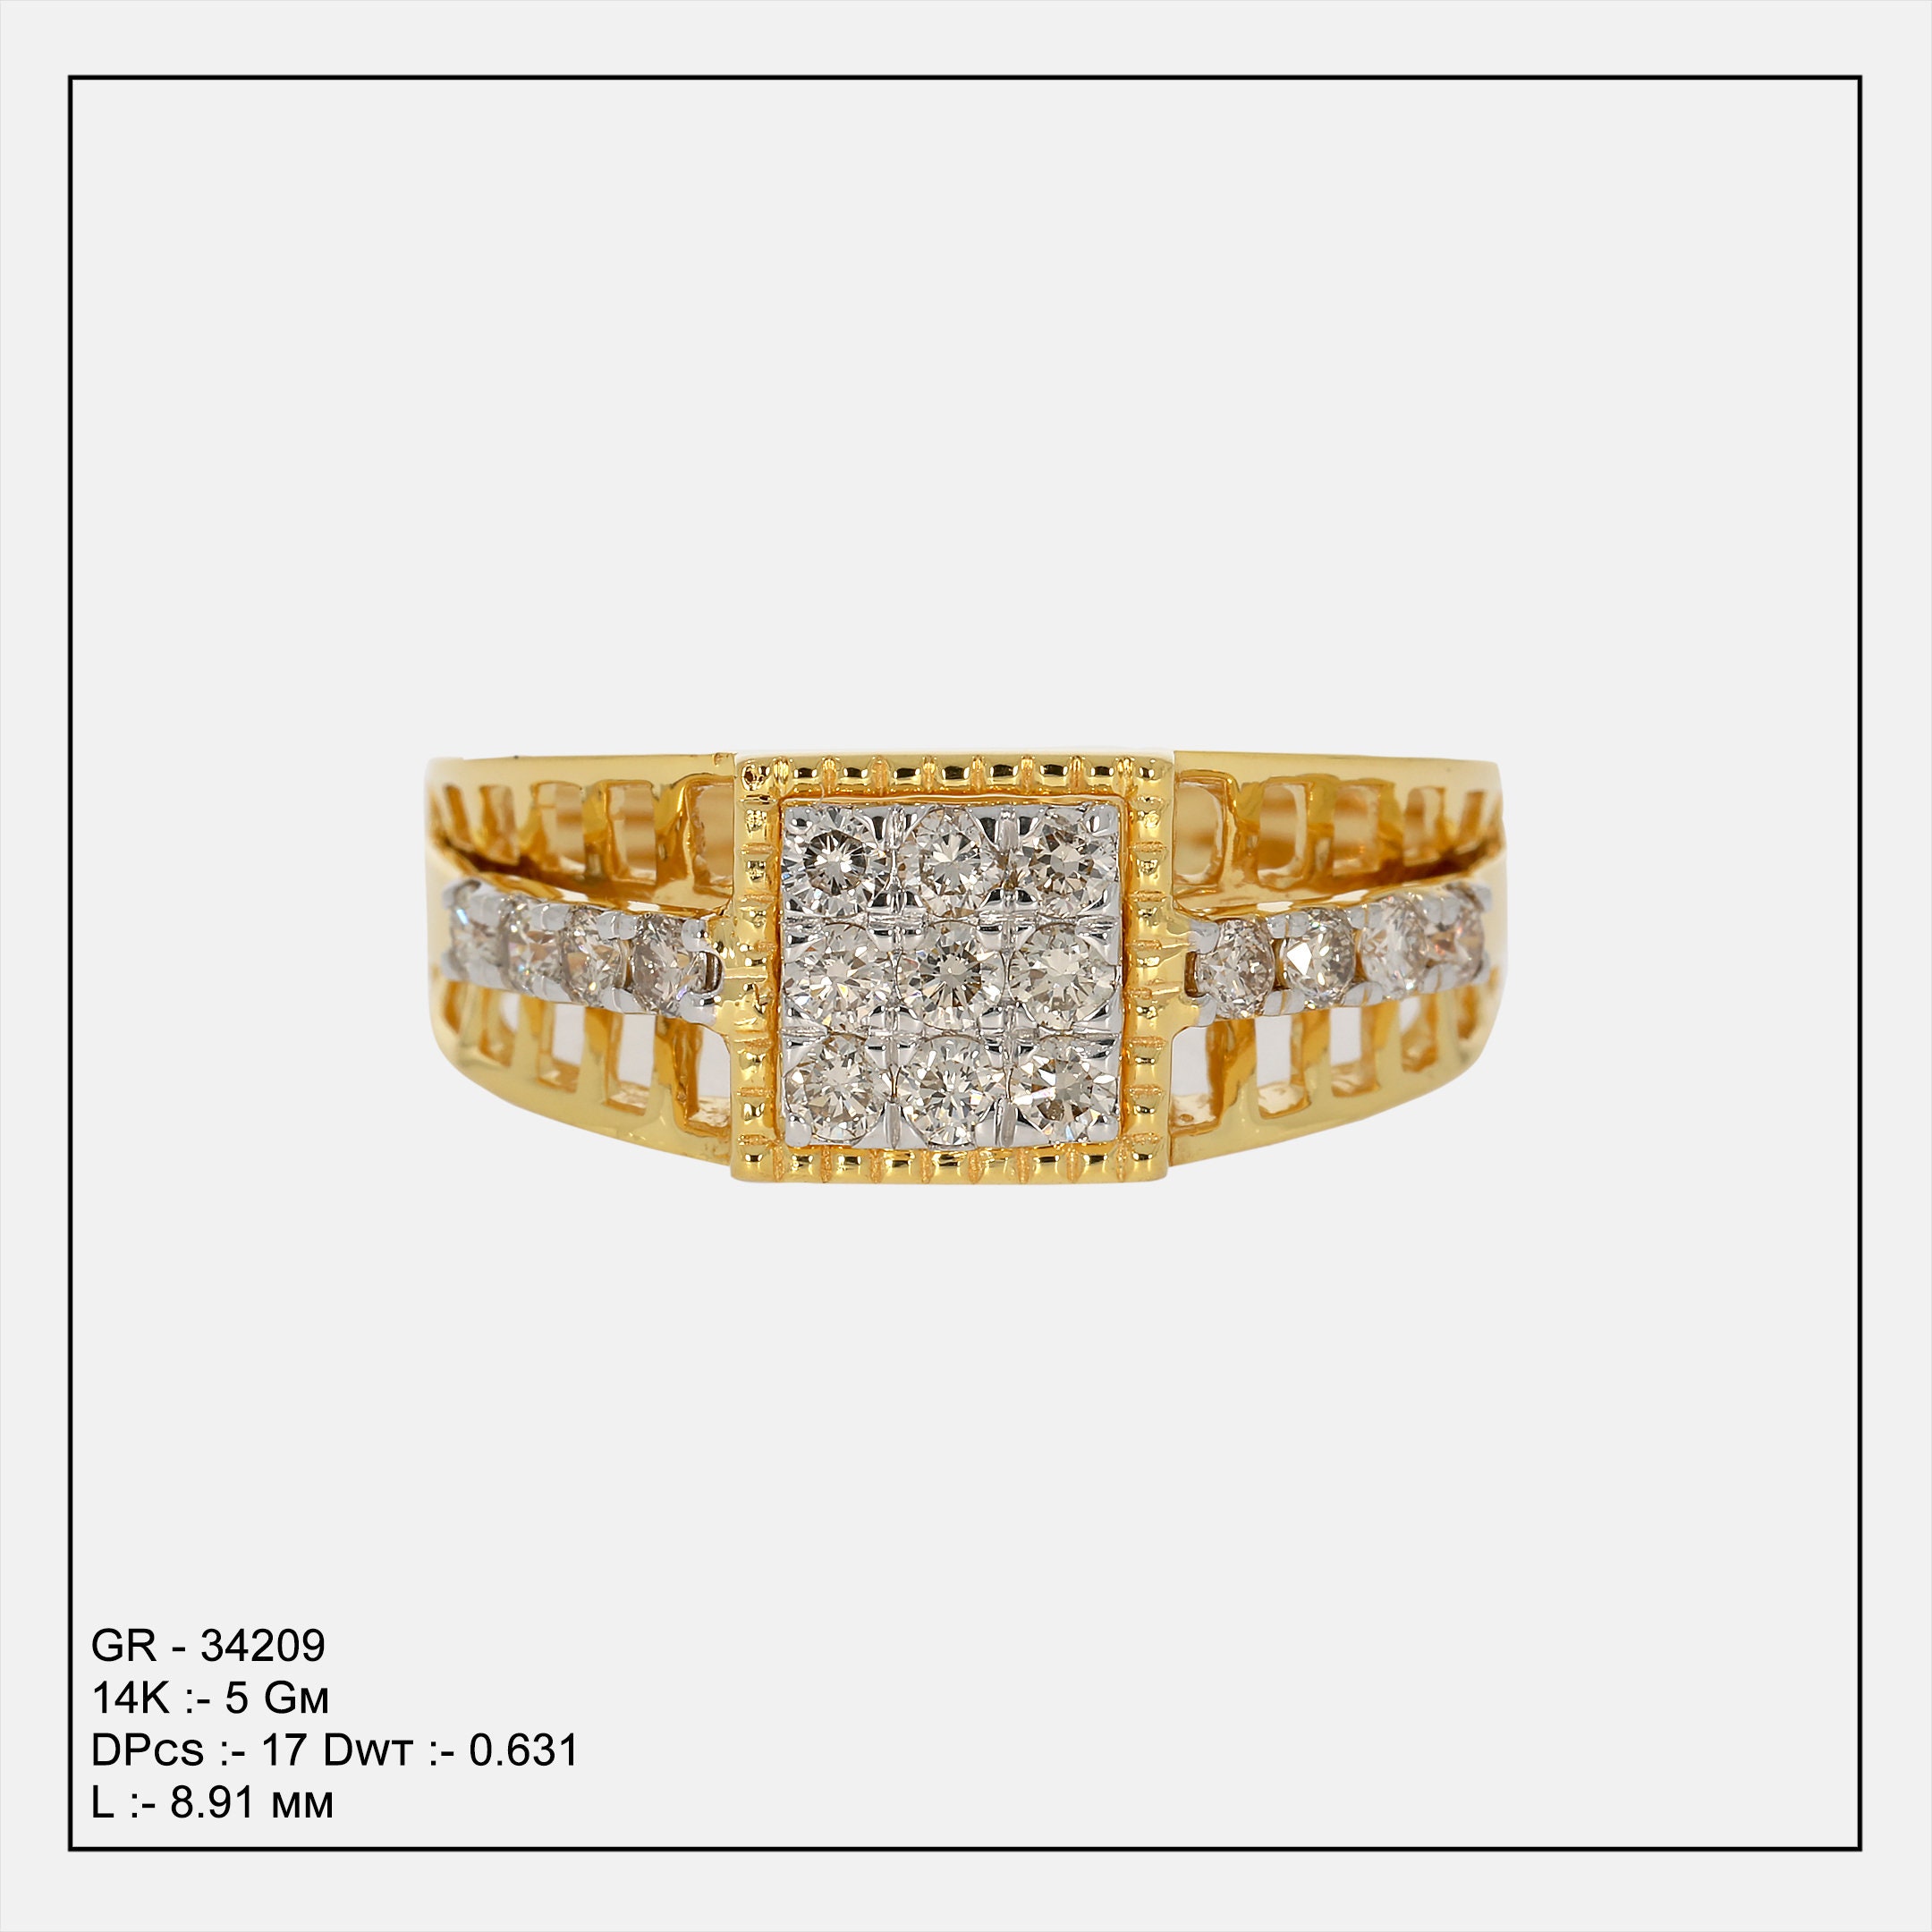 Seal Ring Men's Ring 333 Gold - Size 69 - 5,10 Gram | eBay